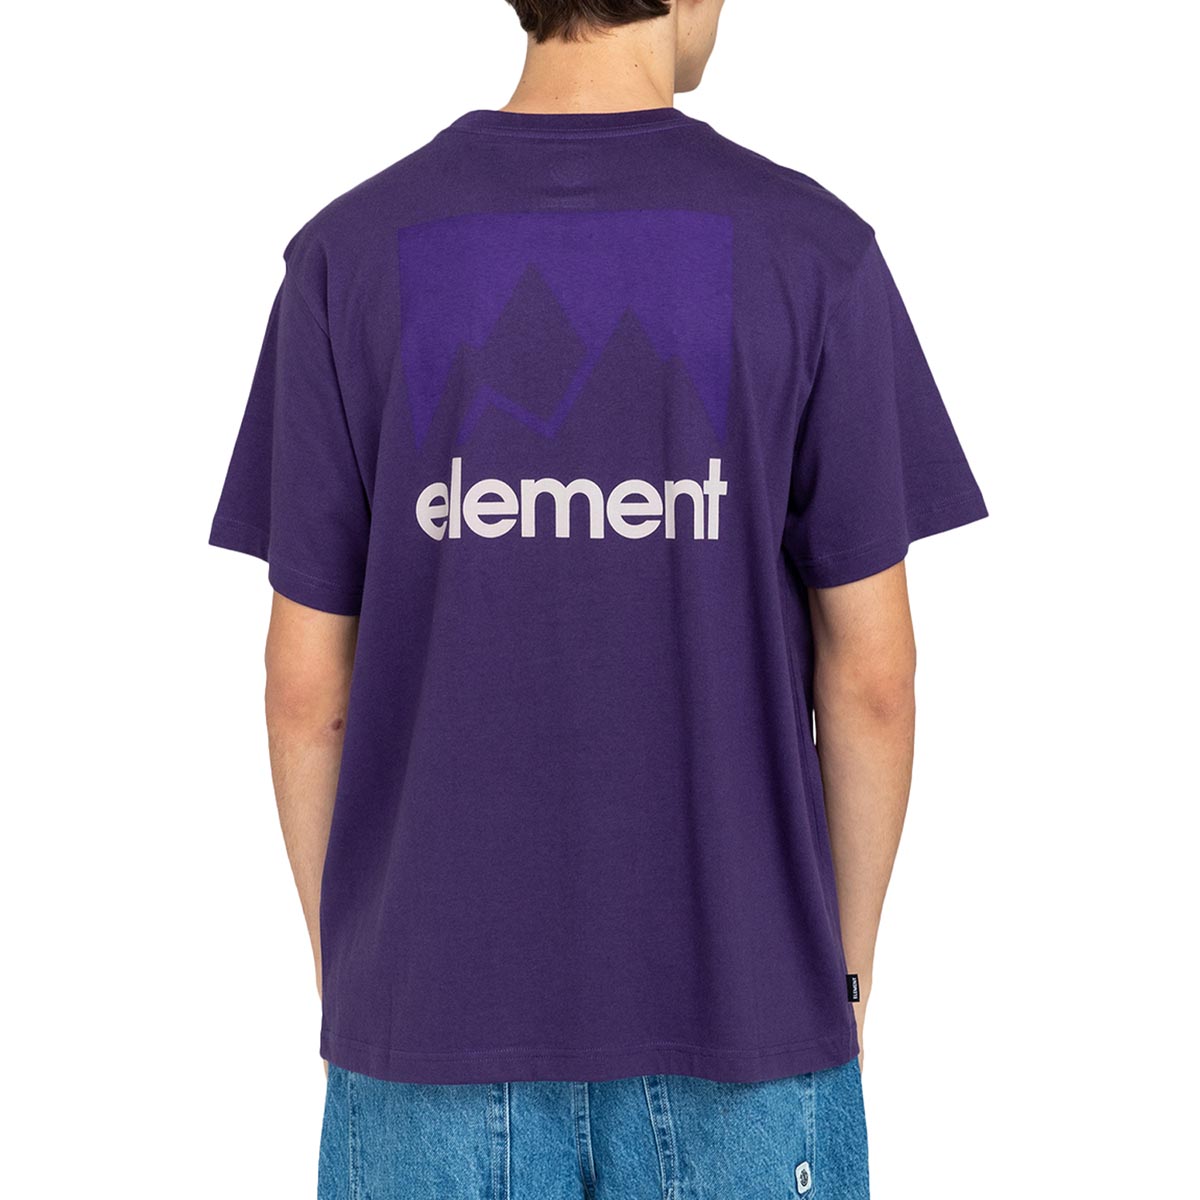 ELEMENT - JOINT 2.0 T-SHIRT